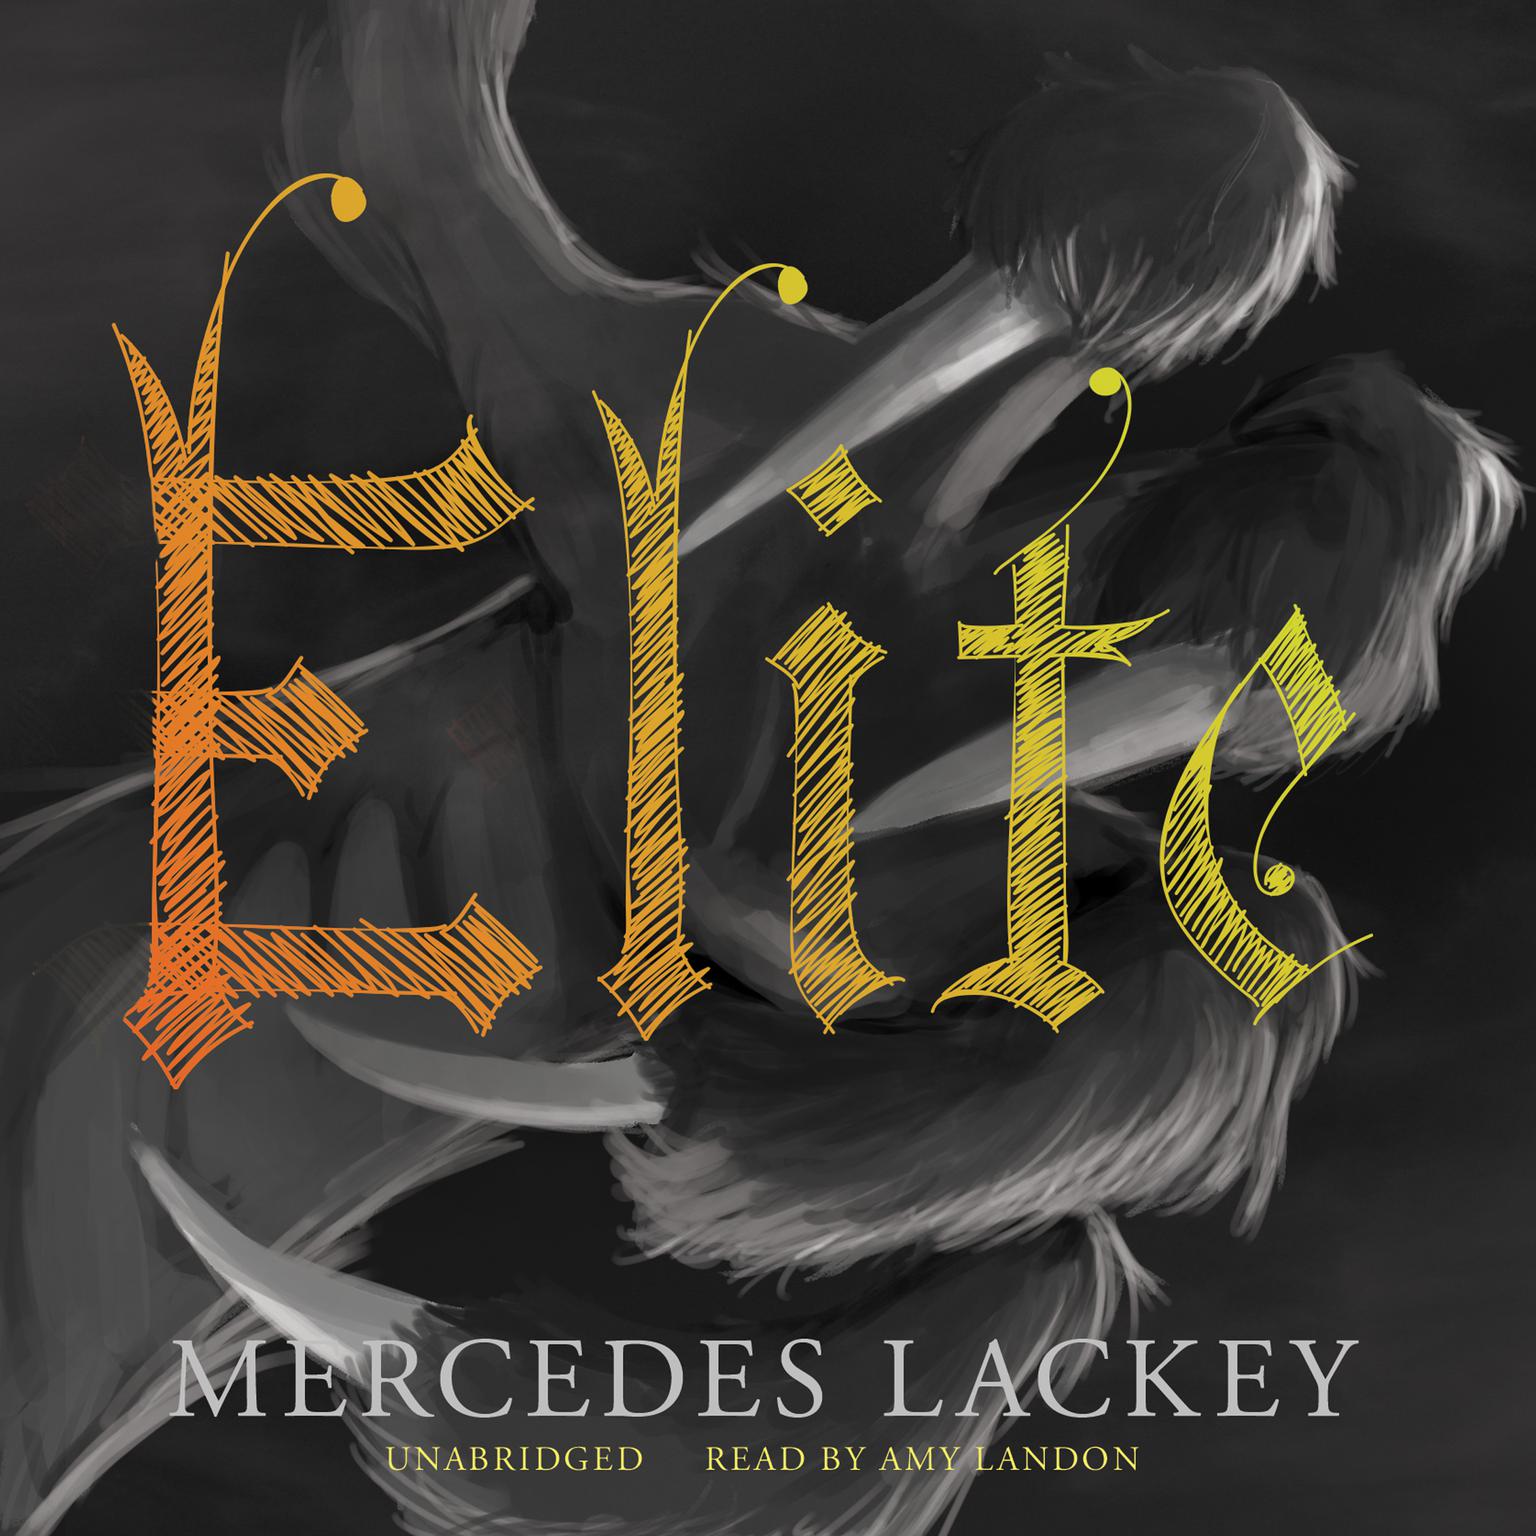 Elite Audiobook, by Mercedes Lackey